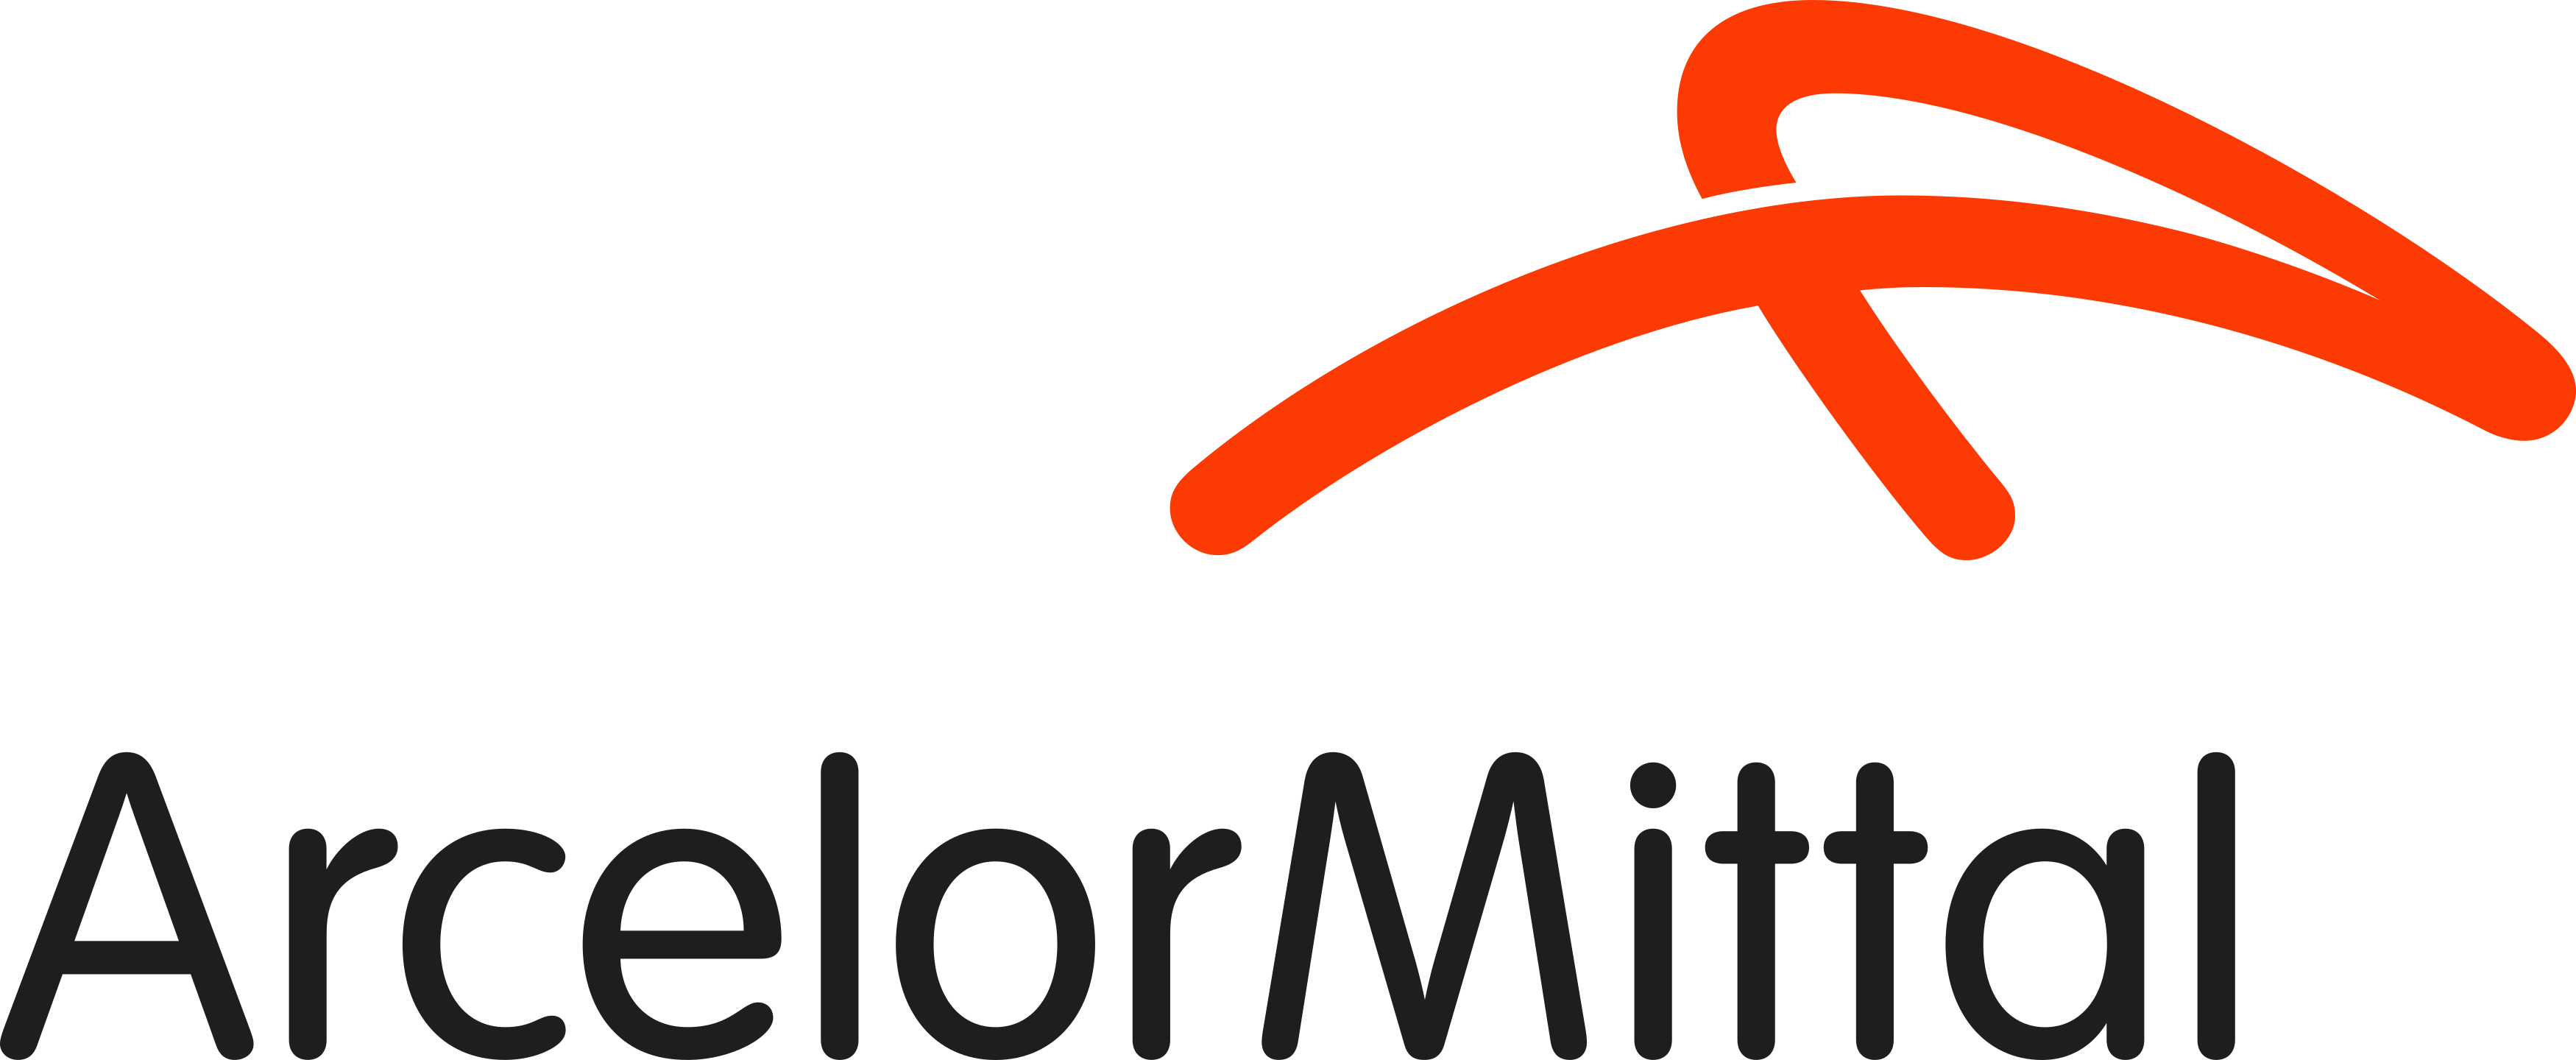 Logo-ArcelorMittal